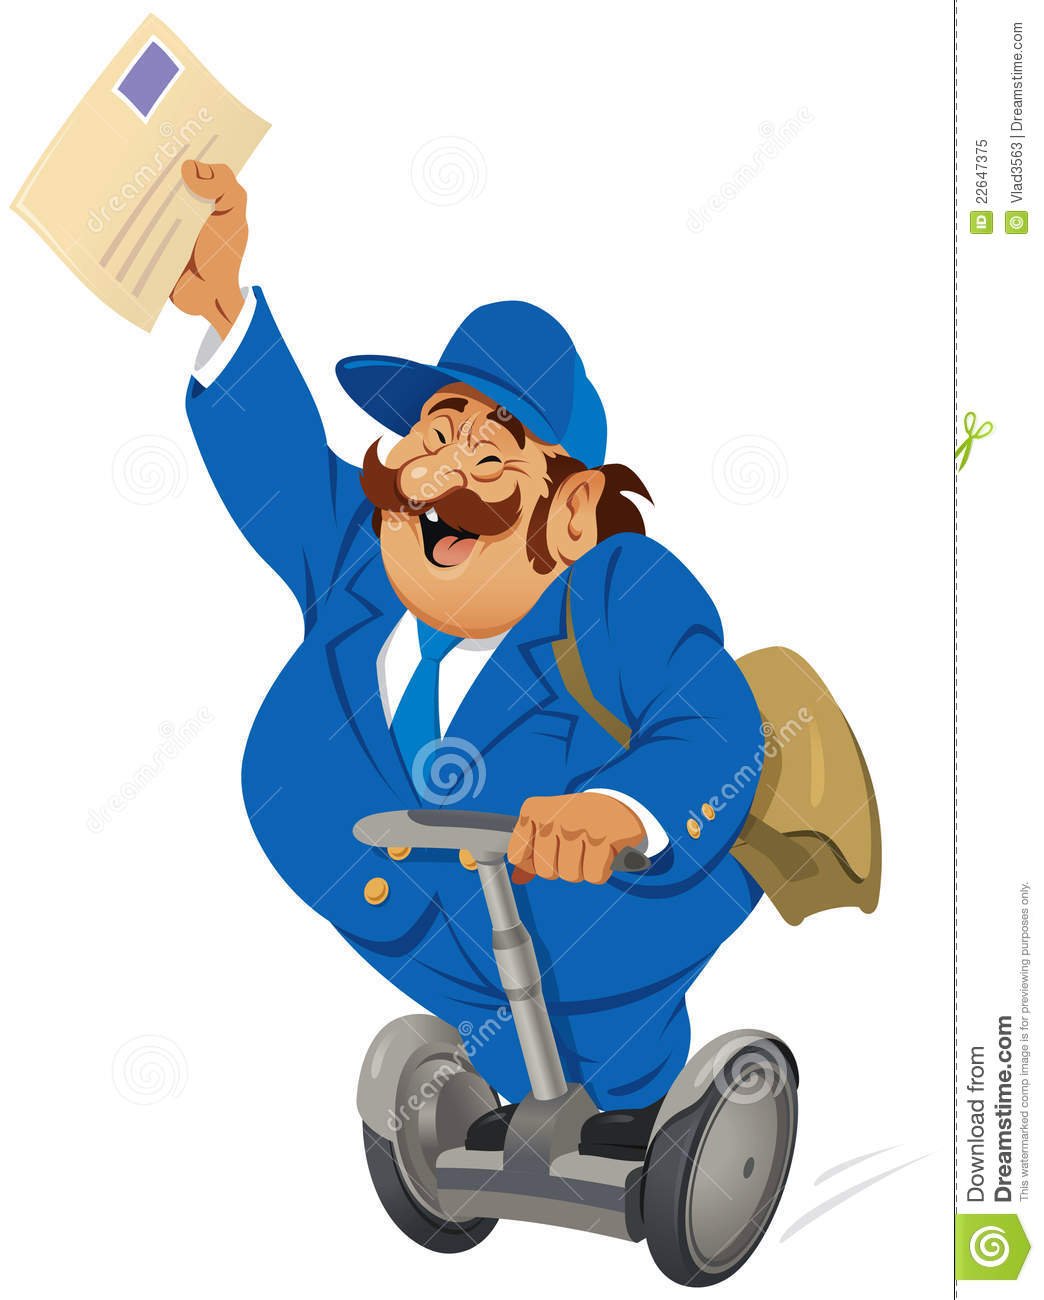 Postman On The Segway Royalty Free Stock Photo   Image  22647375